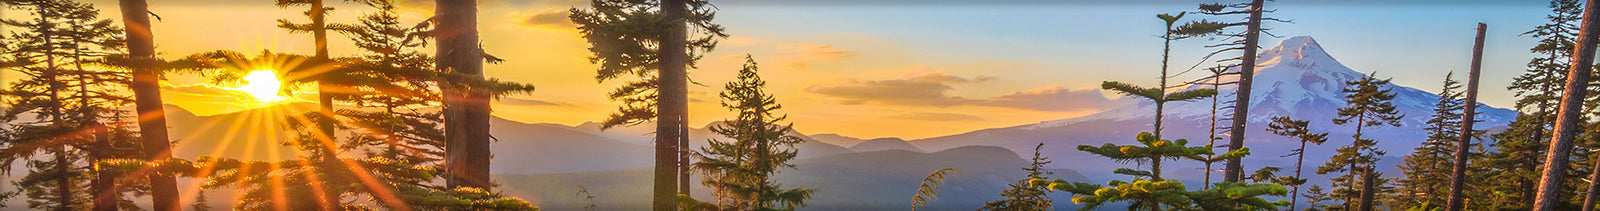 Pacific Northwest Mt. Hood Sunrise Banner 